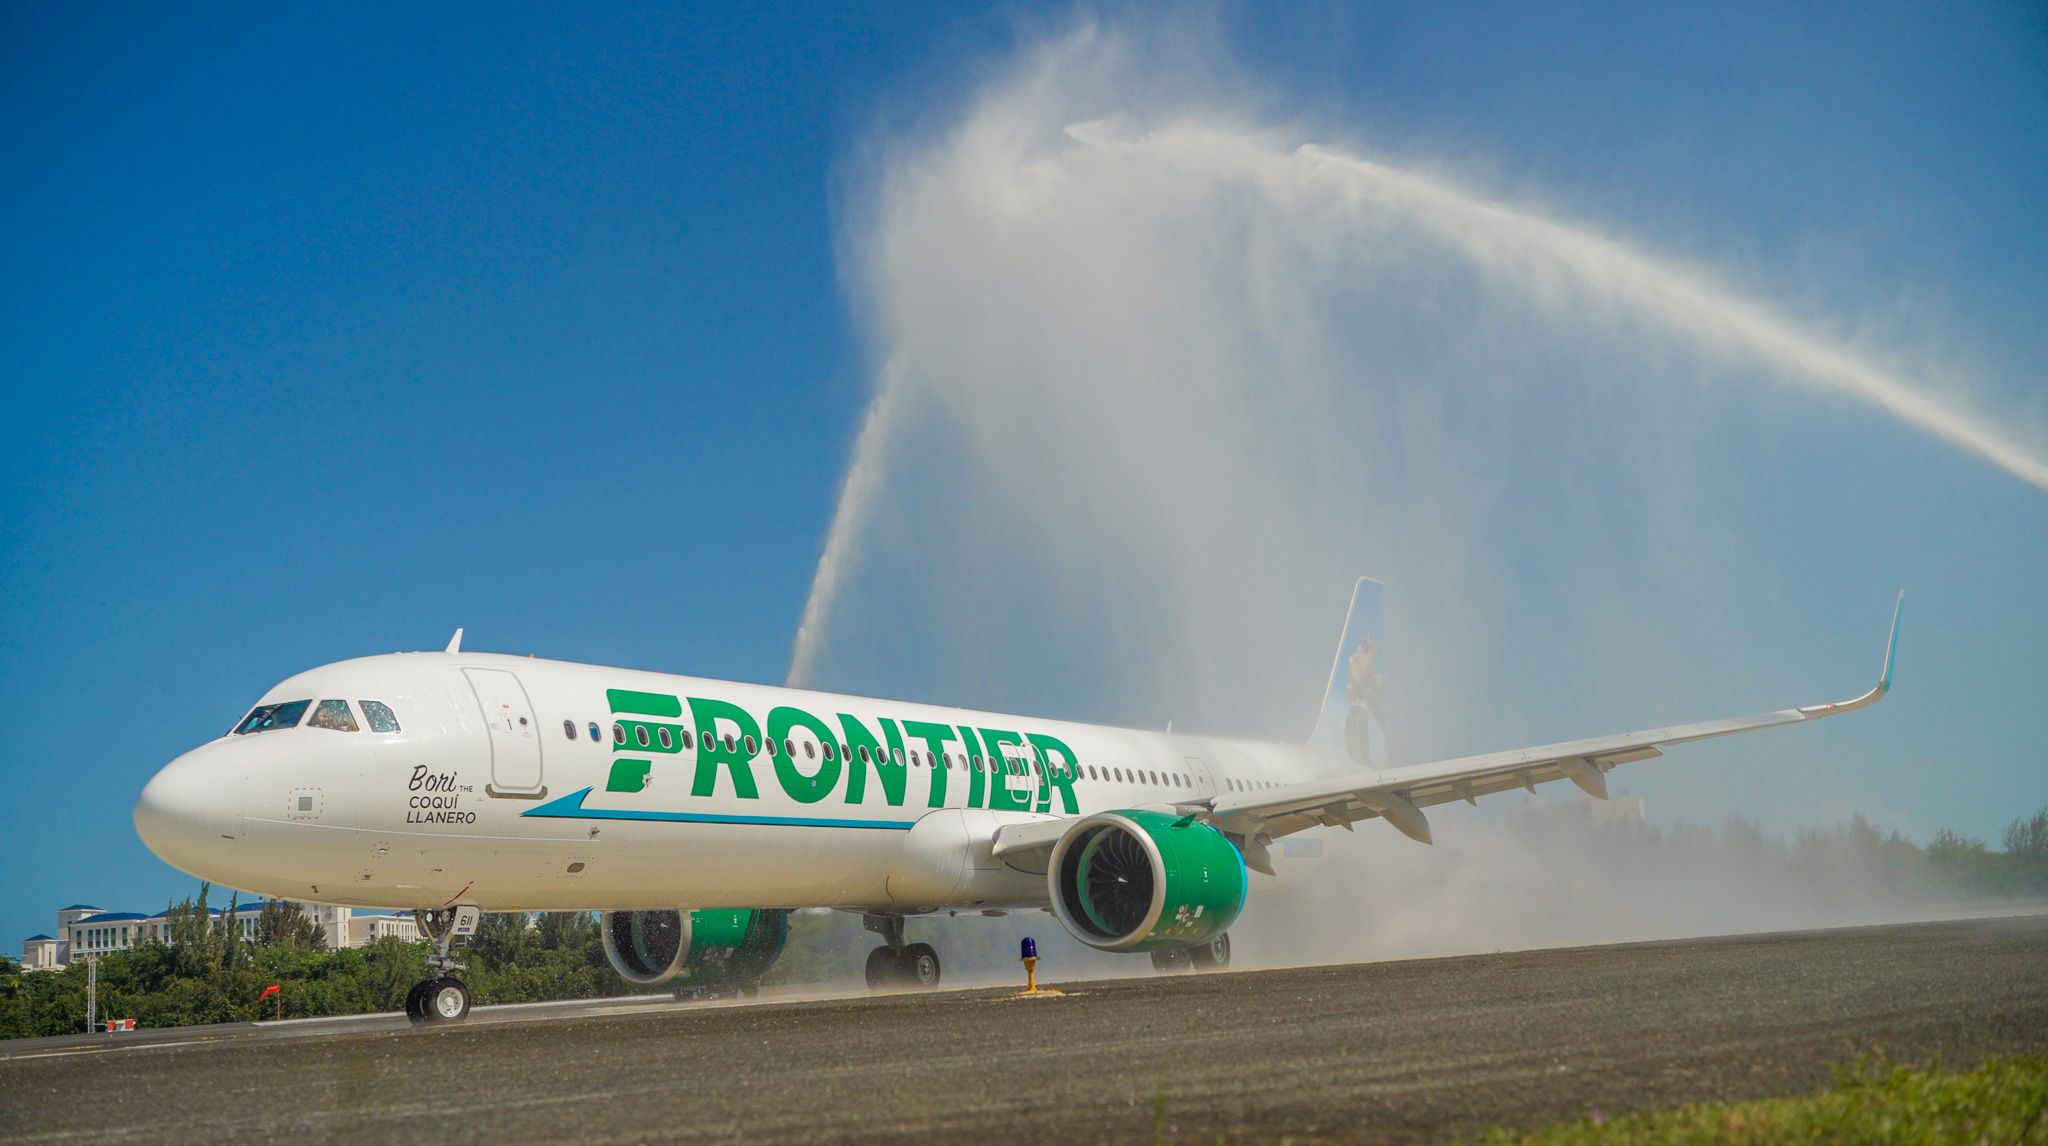 Frontier Airlines Airbus A321neo "Bori the Coquí Llanero"